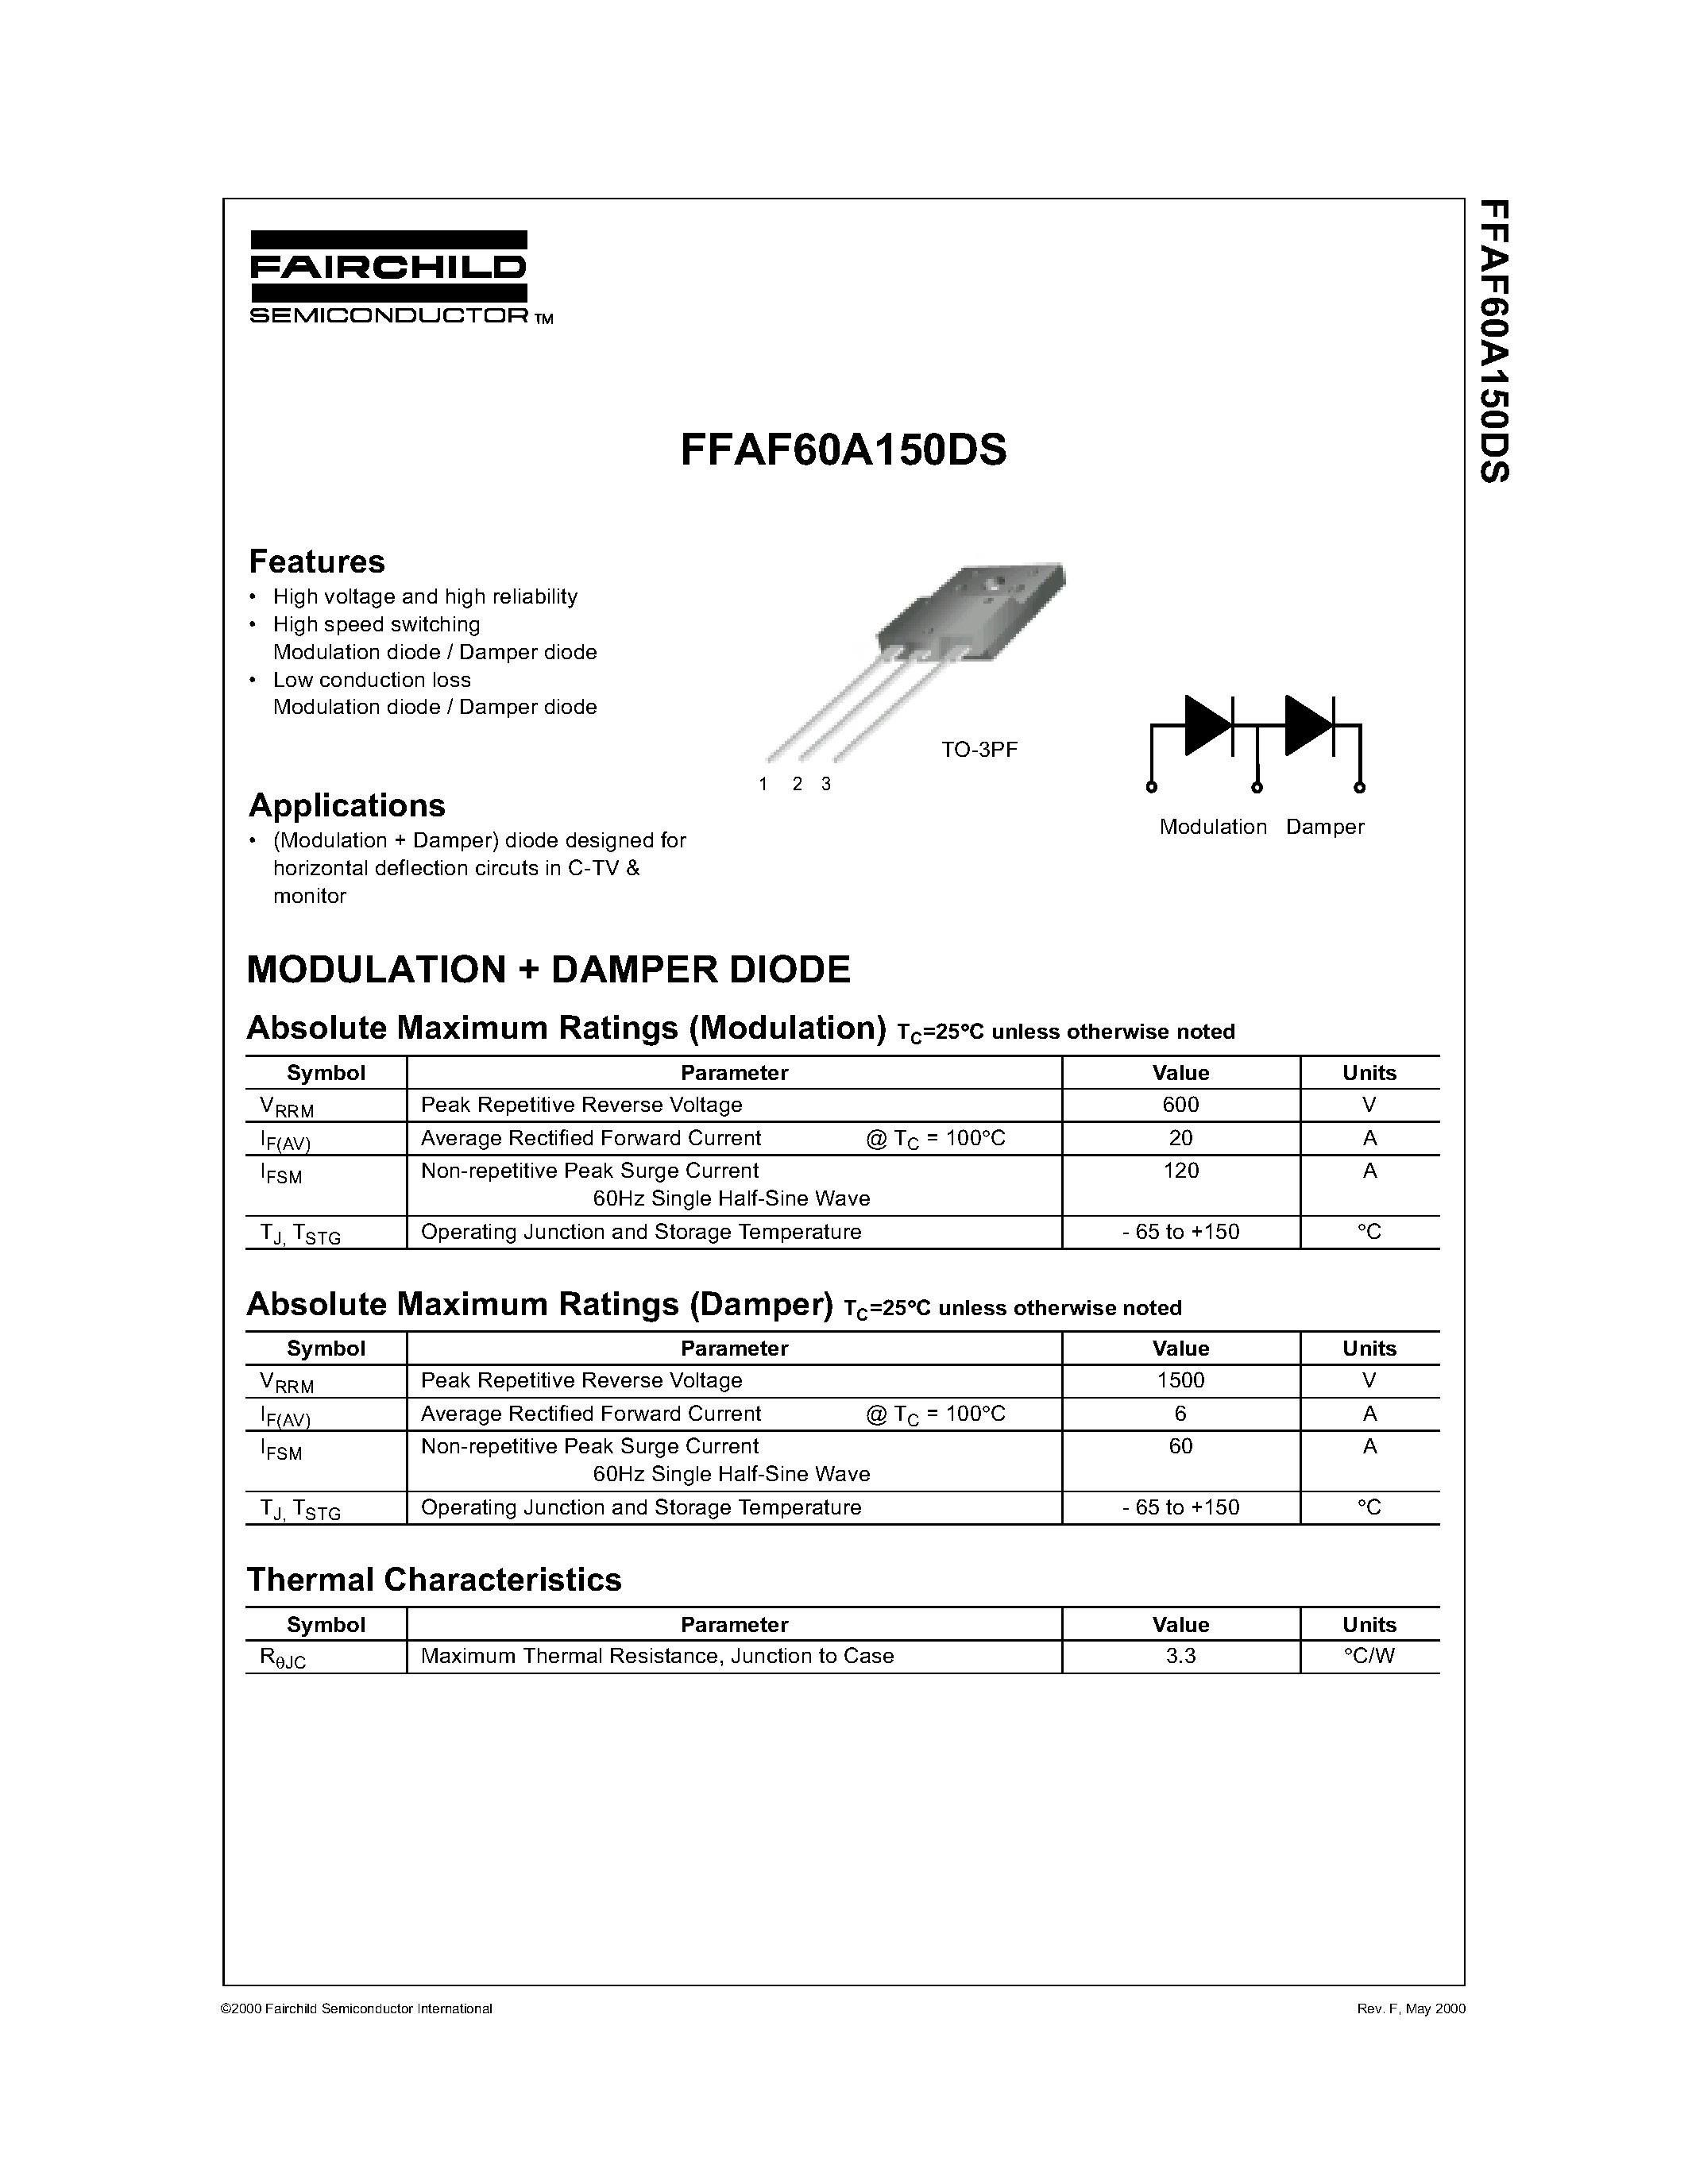 Datasheet FFAF60A150DS - MODULATION + DAMPER DIODE page 1